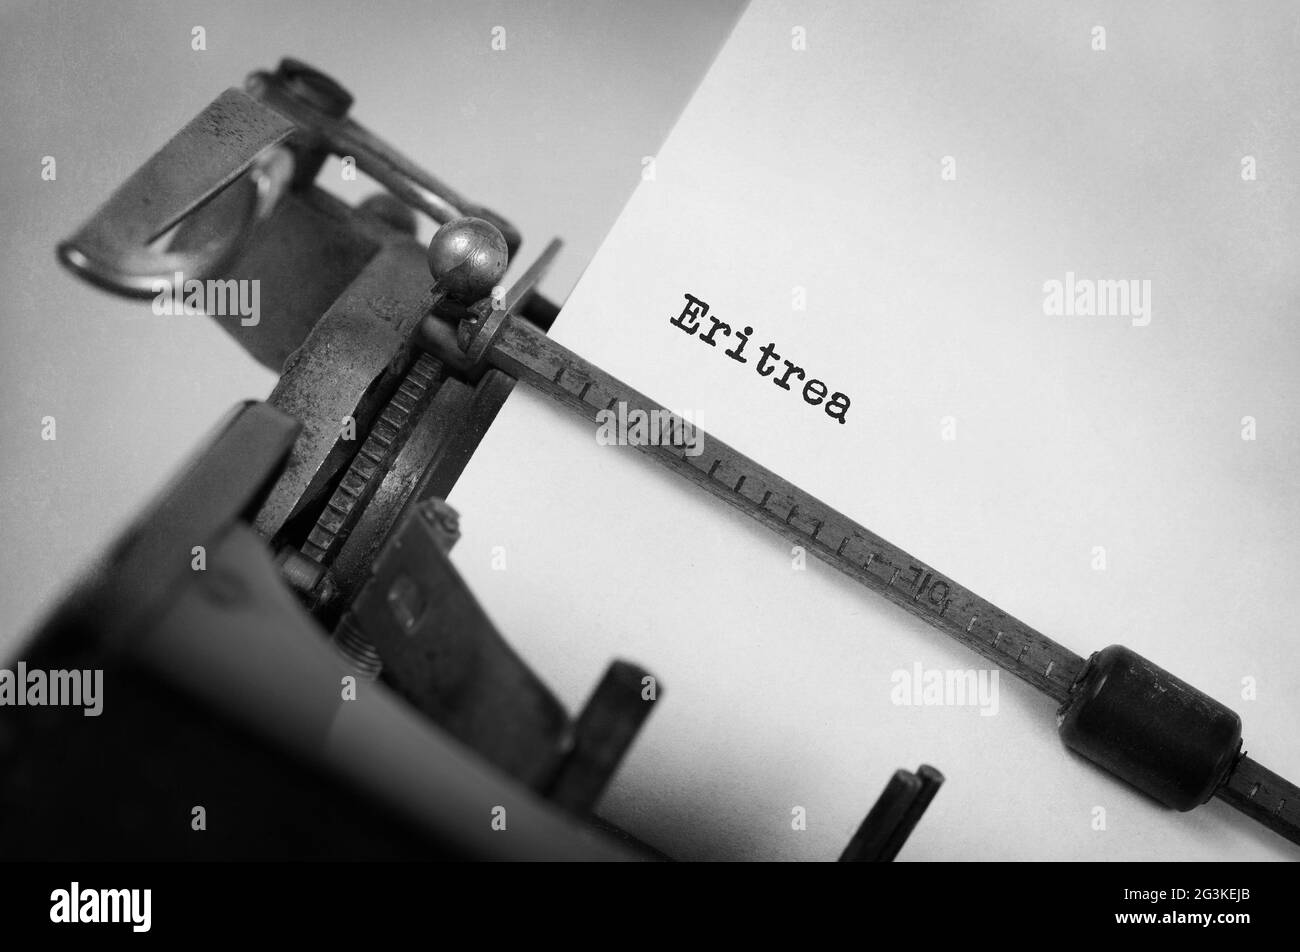 Old typewriter - Eritrea Stock Photo